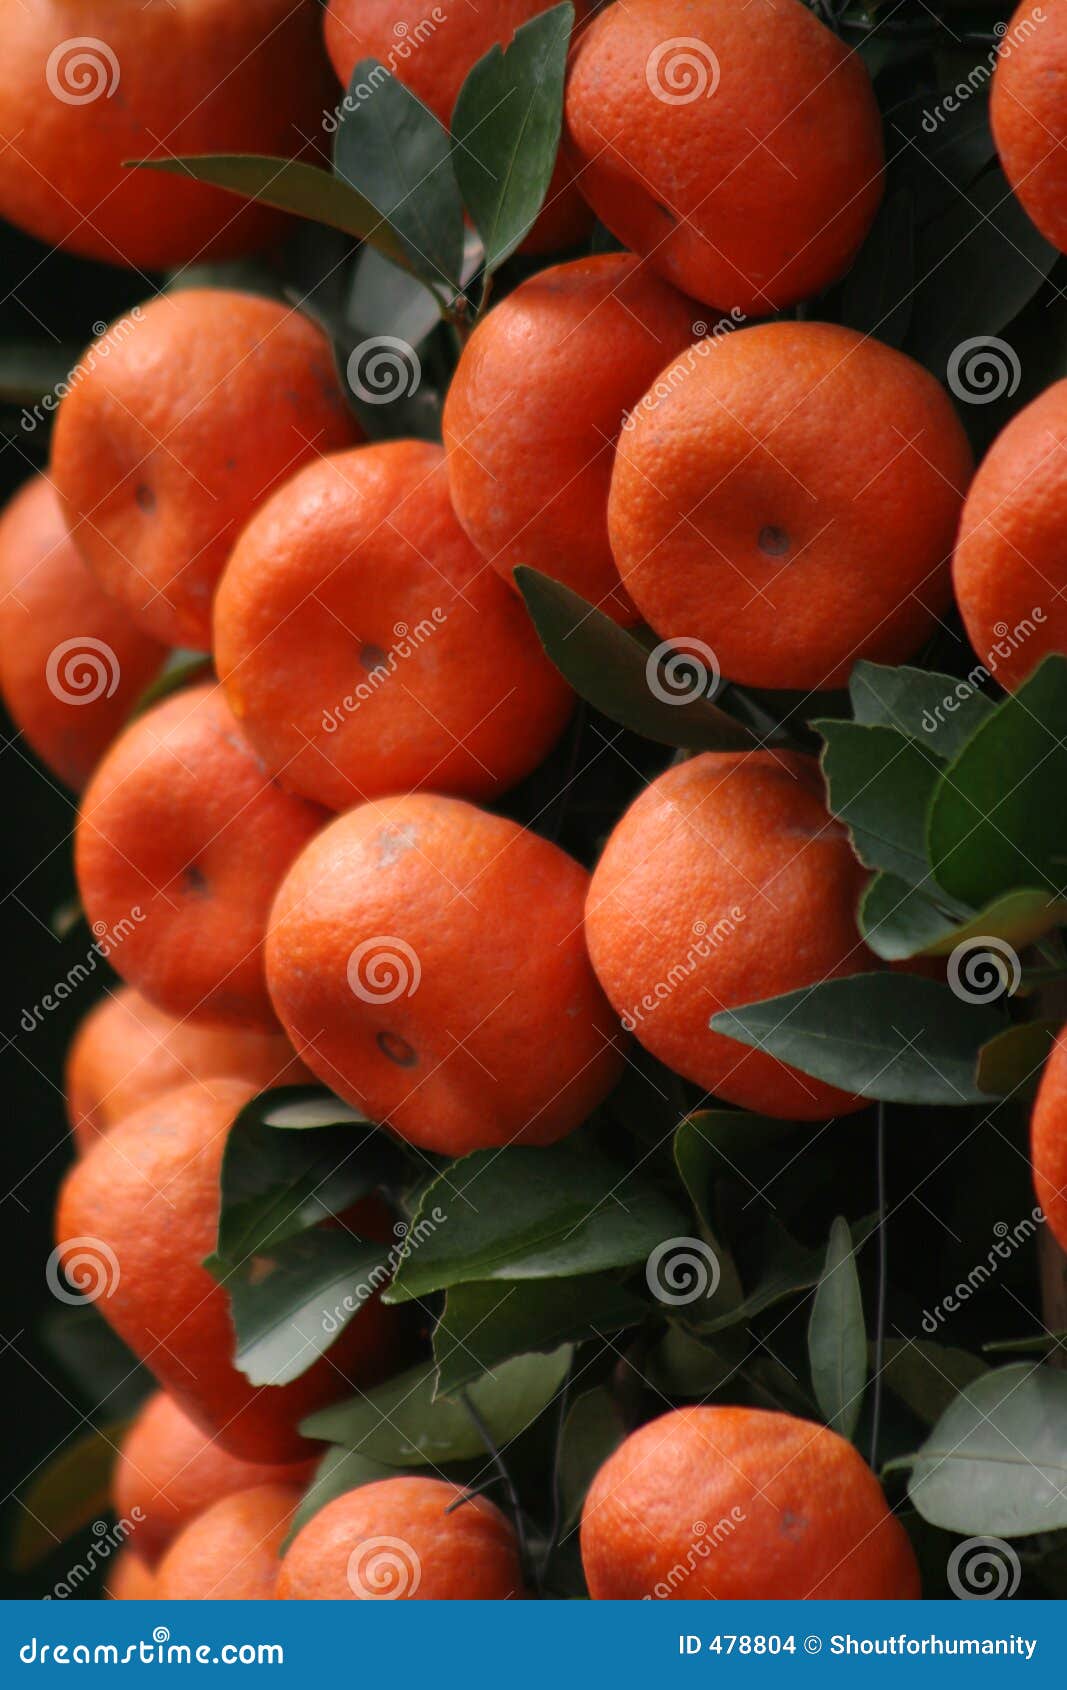 lucky tangerines